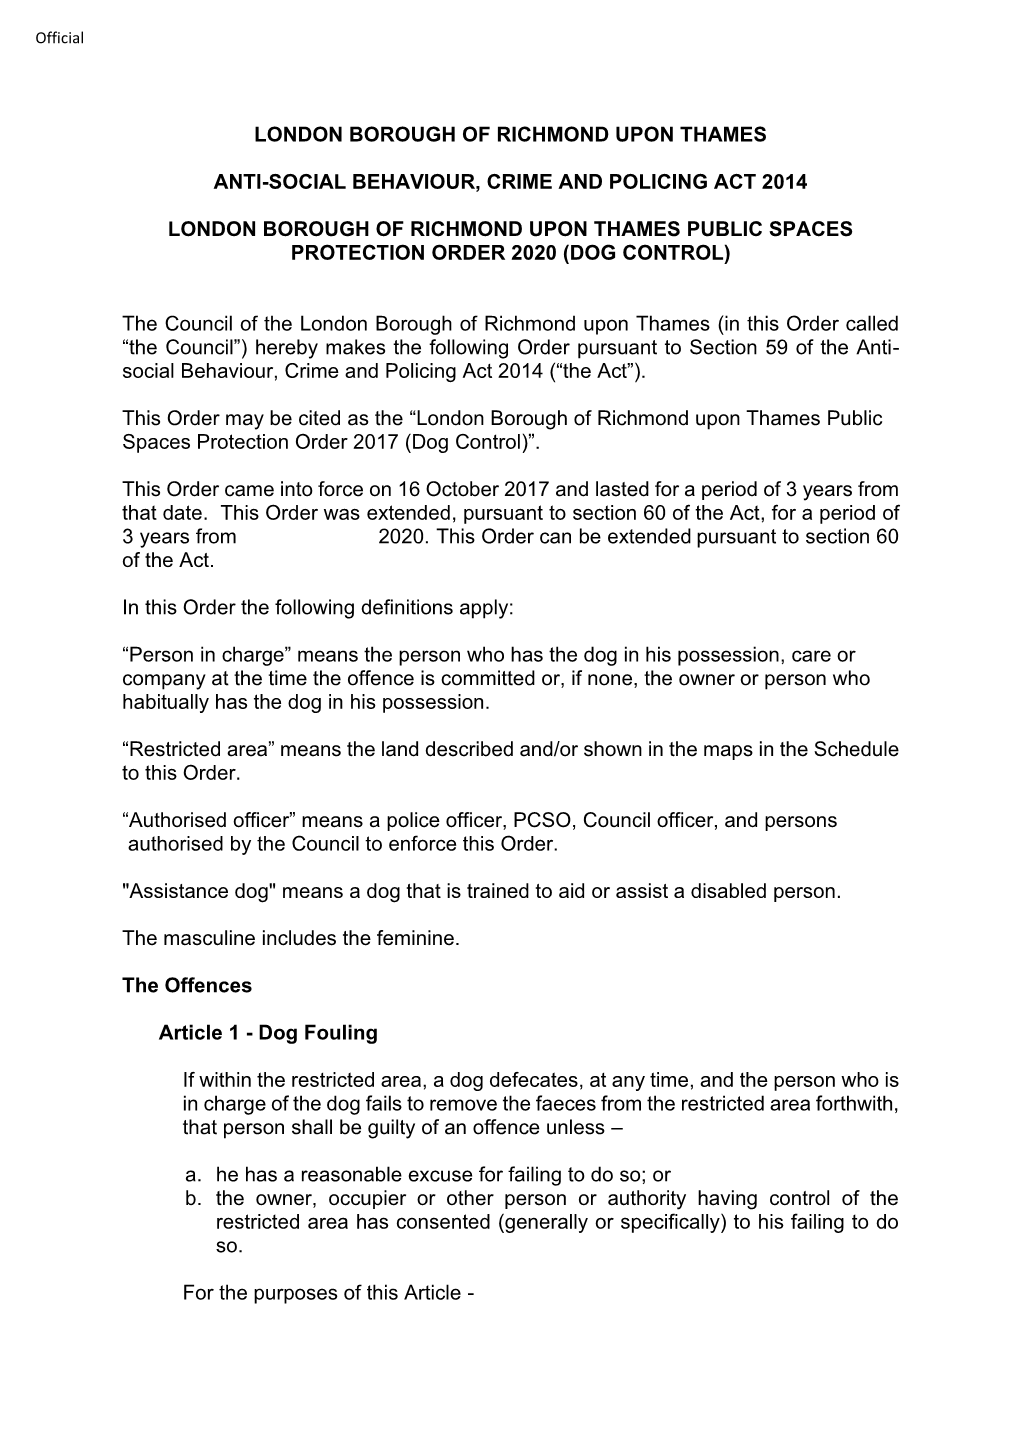 London Borough of Richmond Upon Thames Anti-Social Behaviour, Crime and Policing Act 2014 London Borough of Richmond Upon Thames